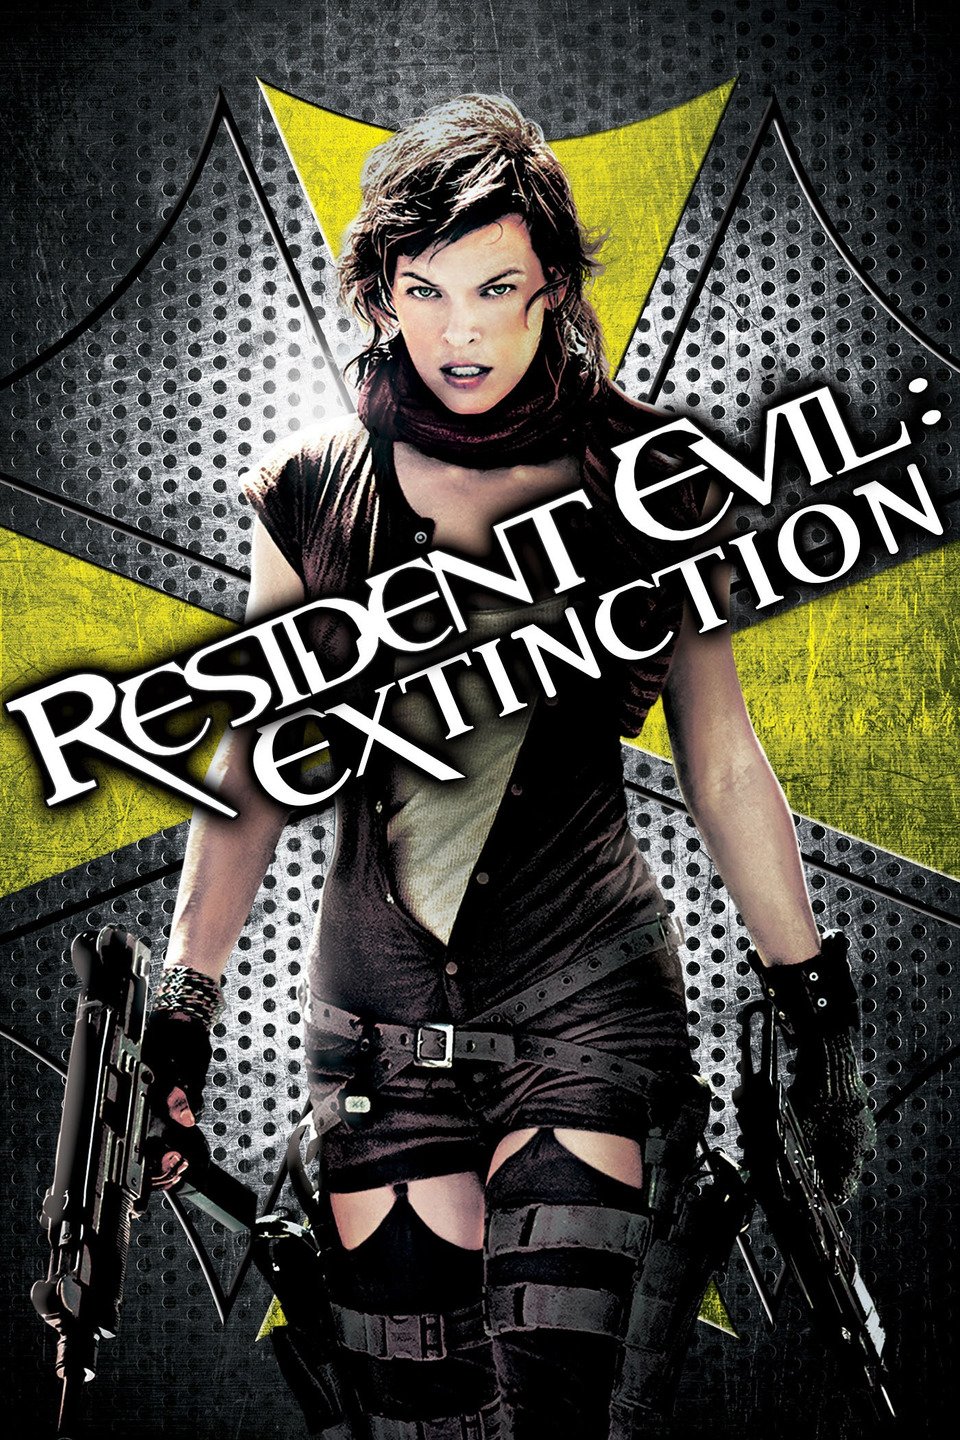 [MINI-HD] Resident Evil: Extinction (2007) ผีชีวะ 3 สงครามสูญพันธ์ไวรัส [1080p] [เสียงไทย DTS + อังกฤษ DTS] [BrRip.DTS.x264] [บรรยายไทย + อังกฤษ] [เสียงไทย + ซับไทย]